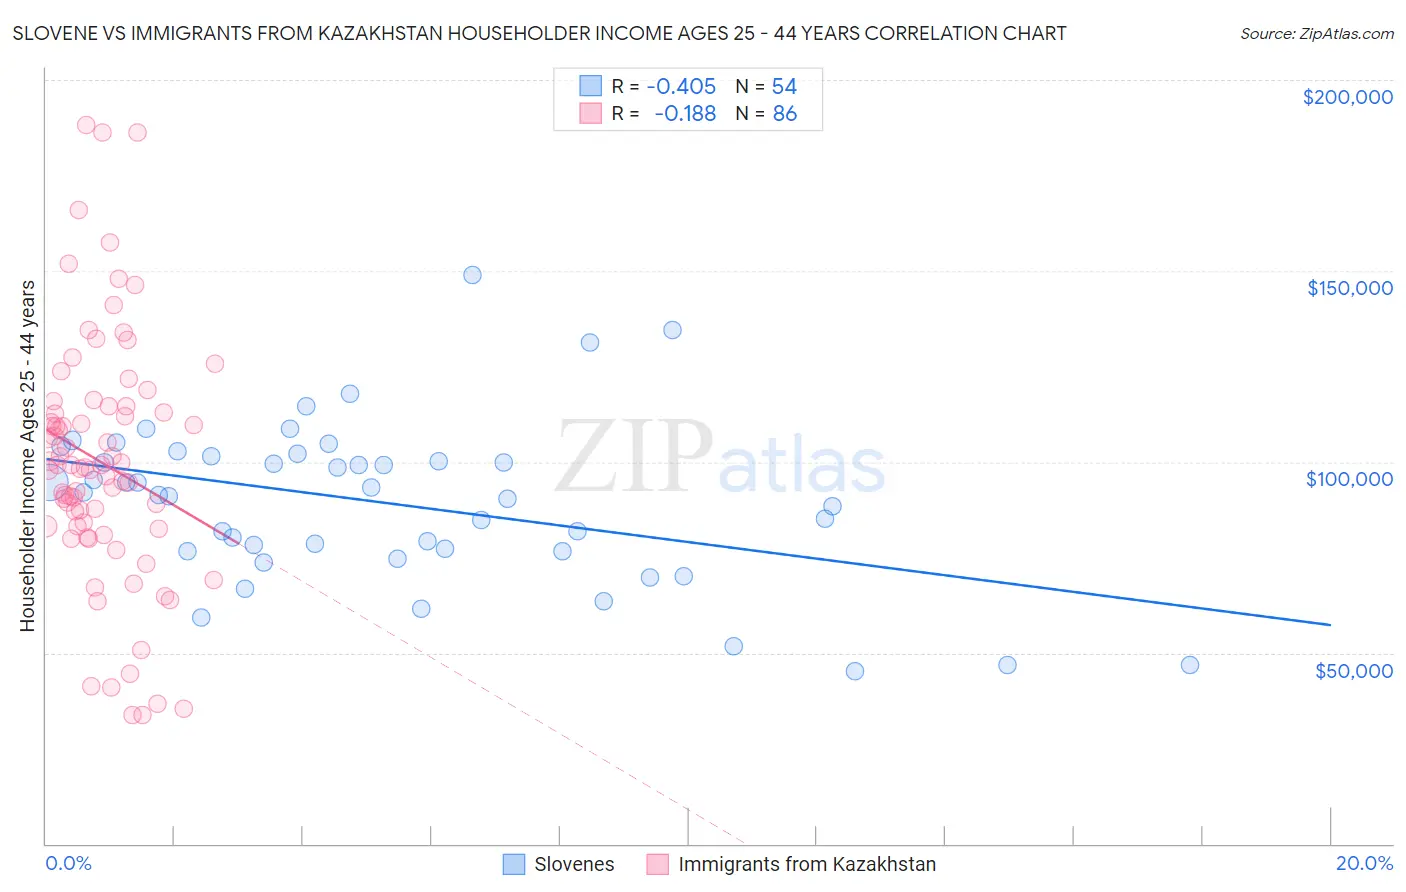 Slovene vs Immigrants from Kazakhstan Householder Income Ages 25 - 44 years